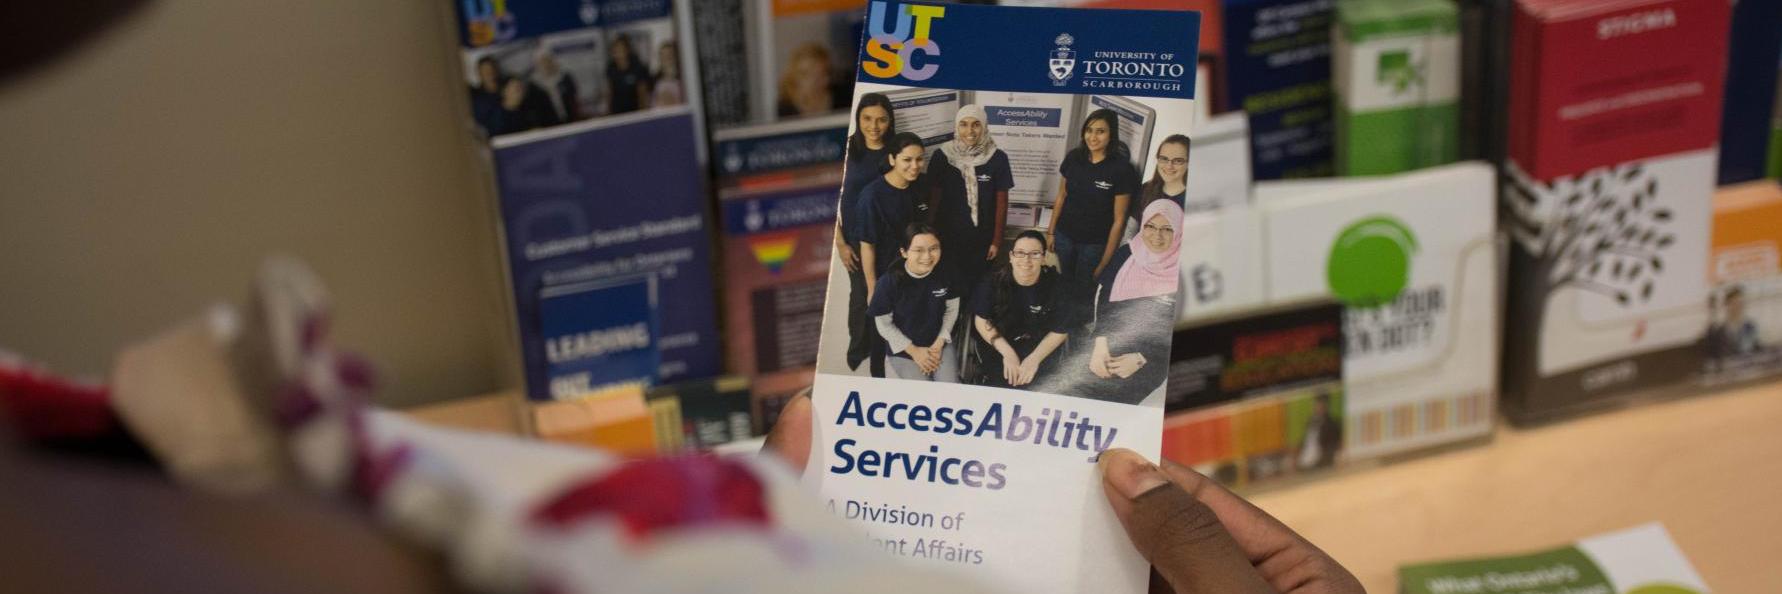 accessability services pamphlet